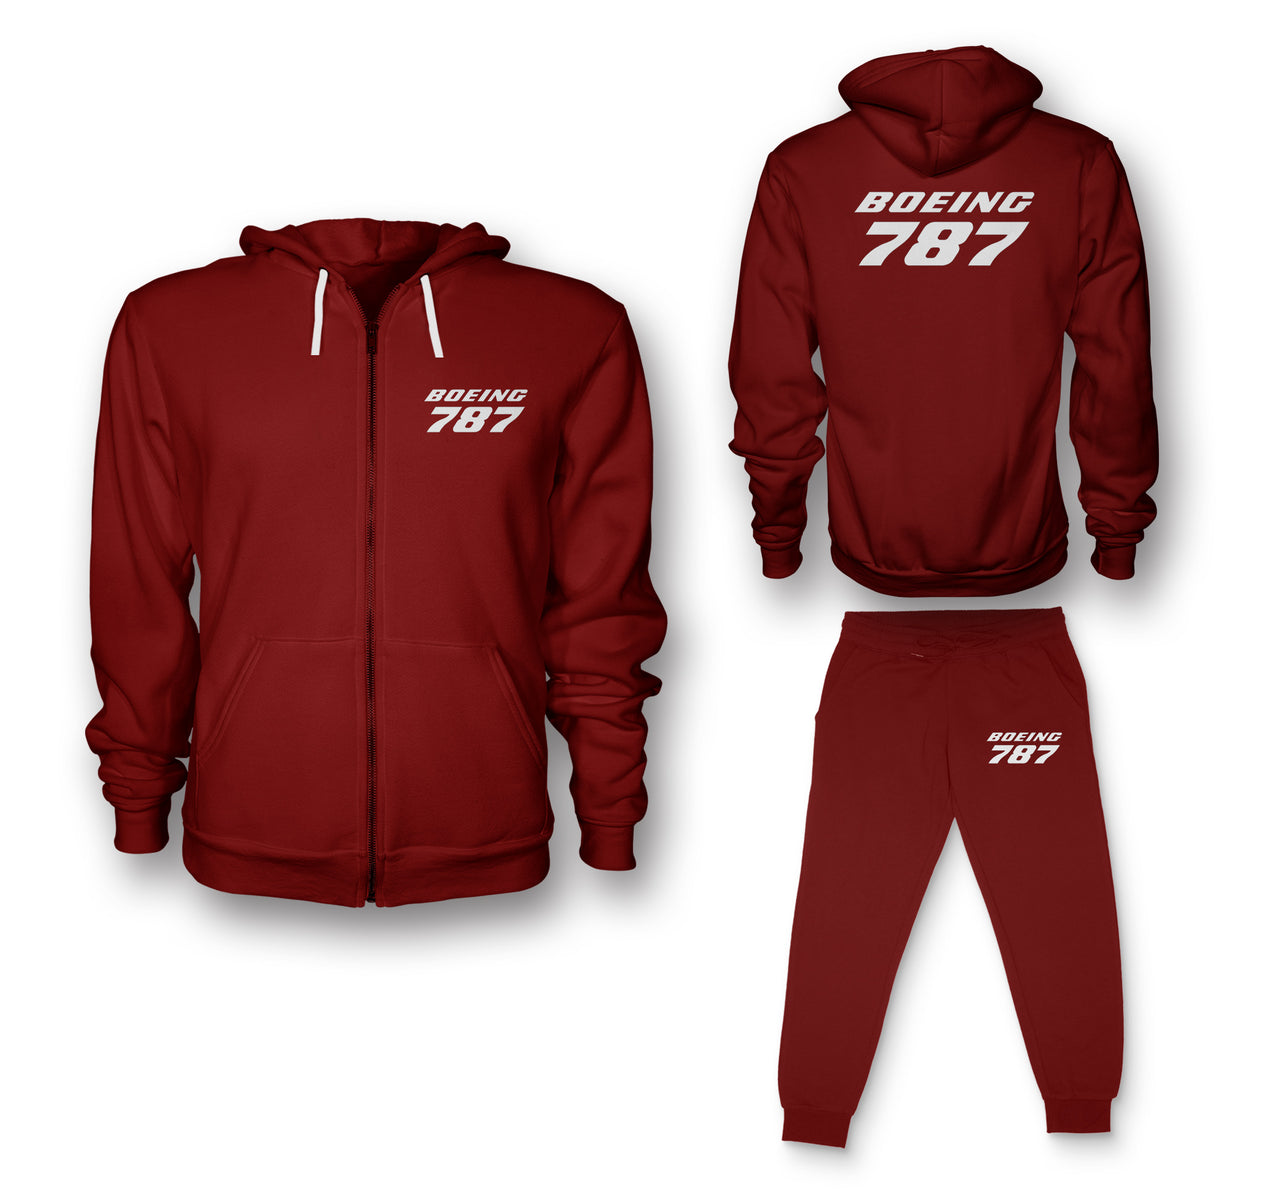 Boeing 787 & Text Designed Zipped Hoodies & Sweatpants Set